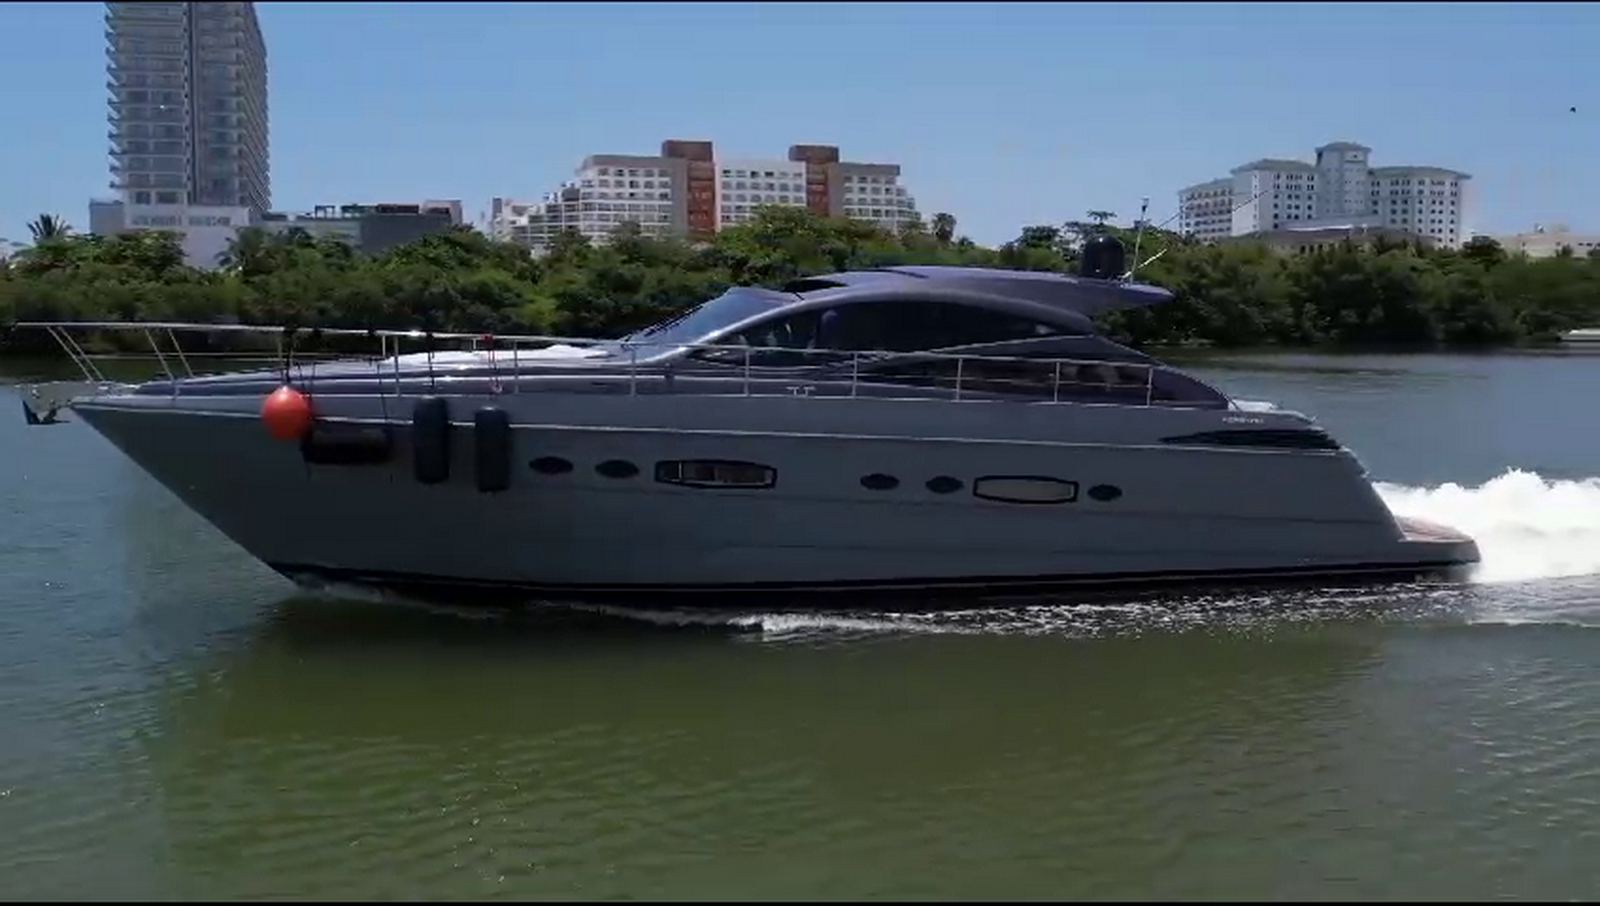 Rent a Pershing yacht cancun boats rental